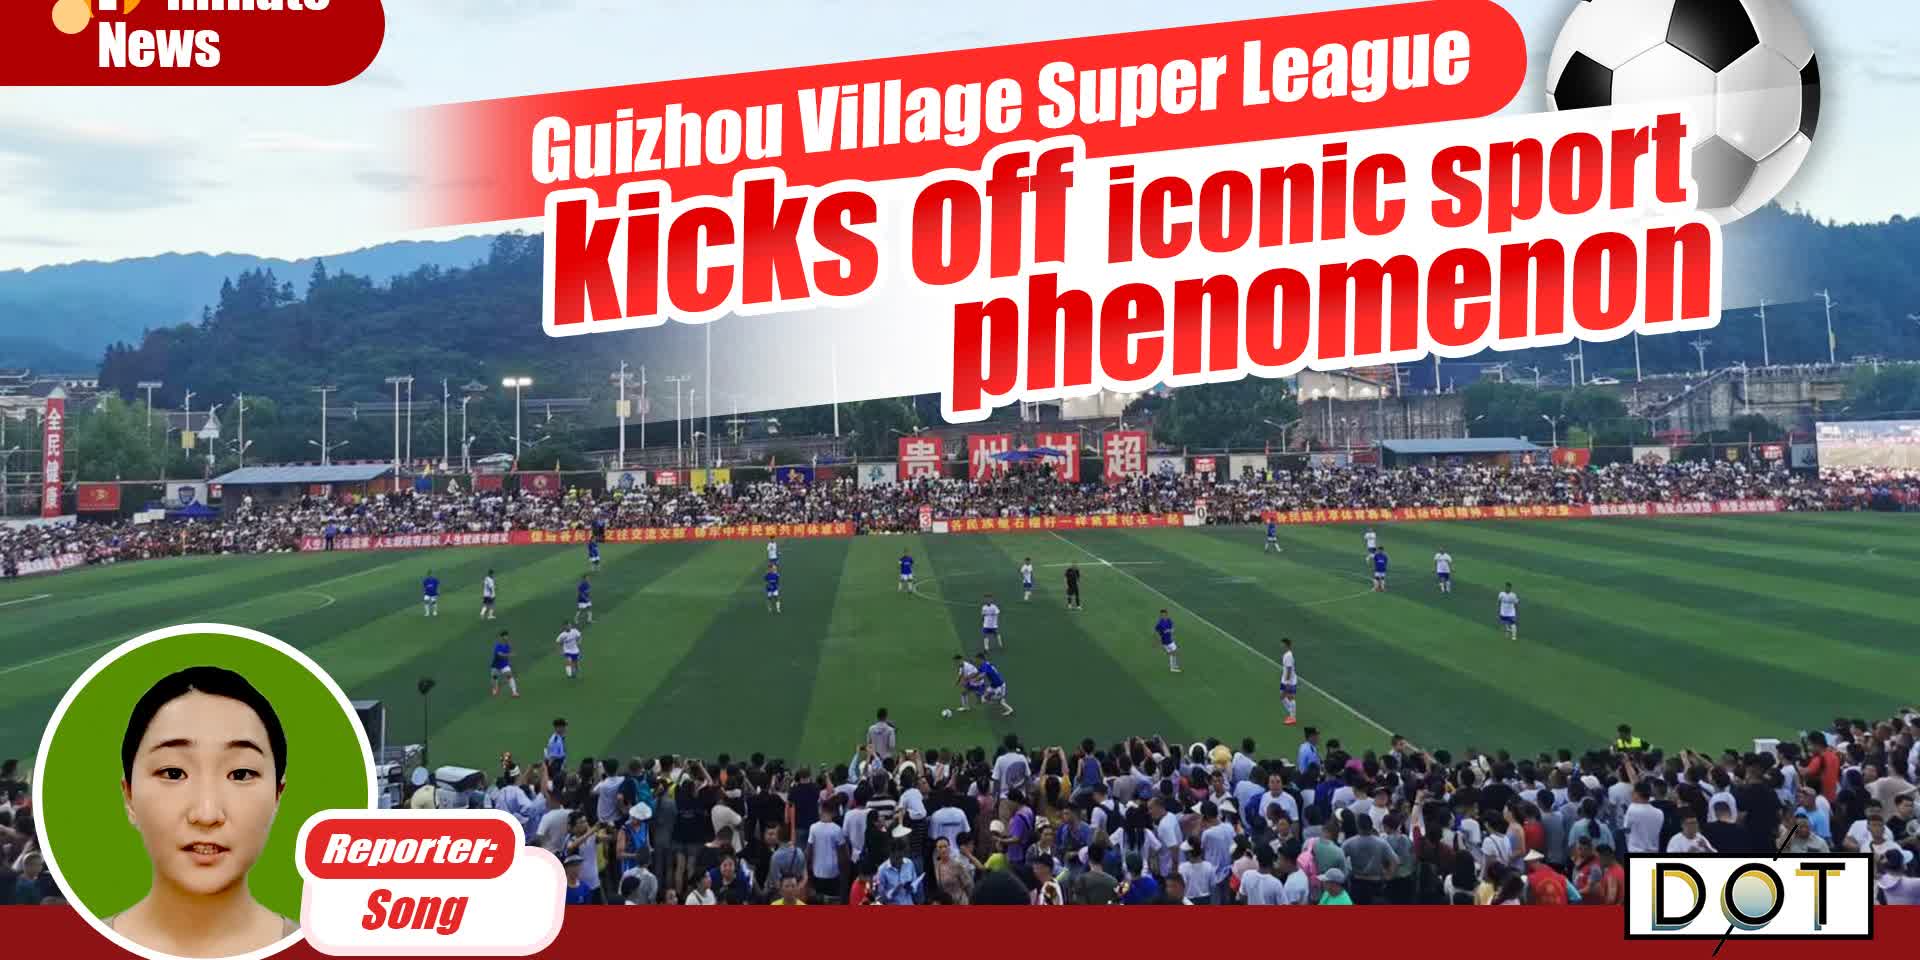 1-minute News | Guizhou Village Super League kicks off iconic sport phenomenon